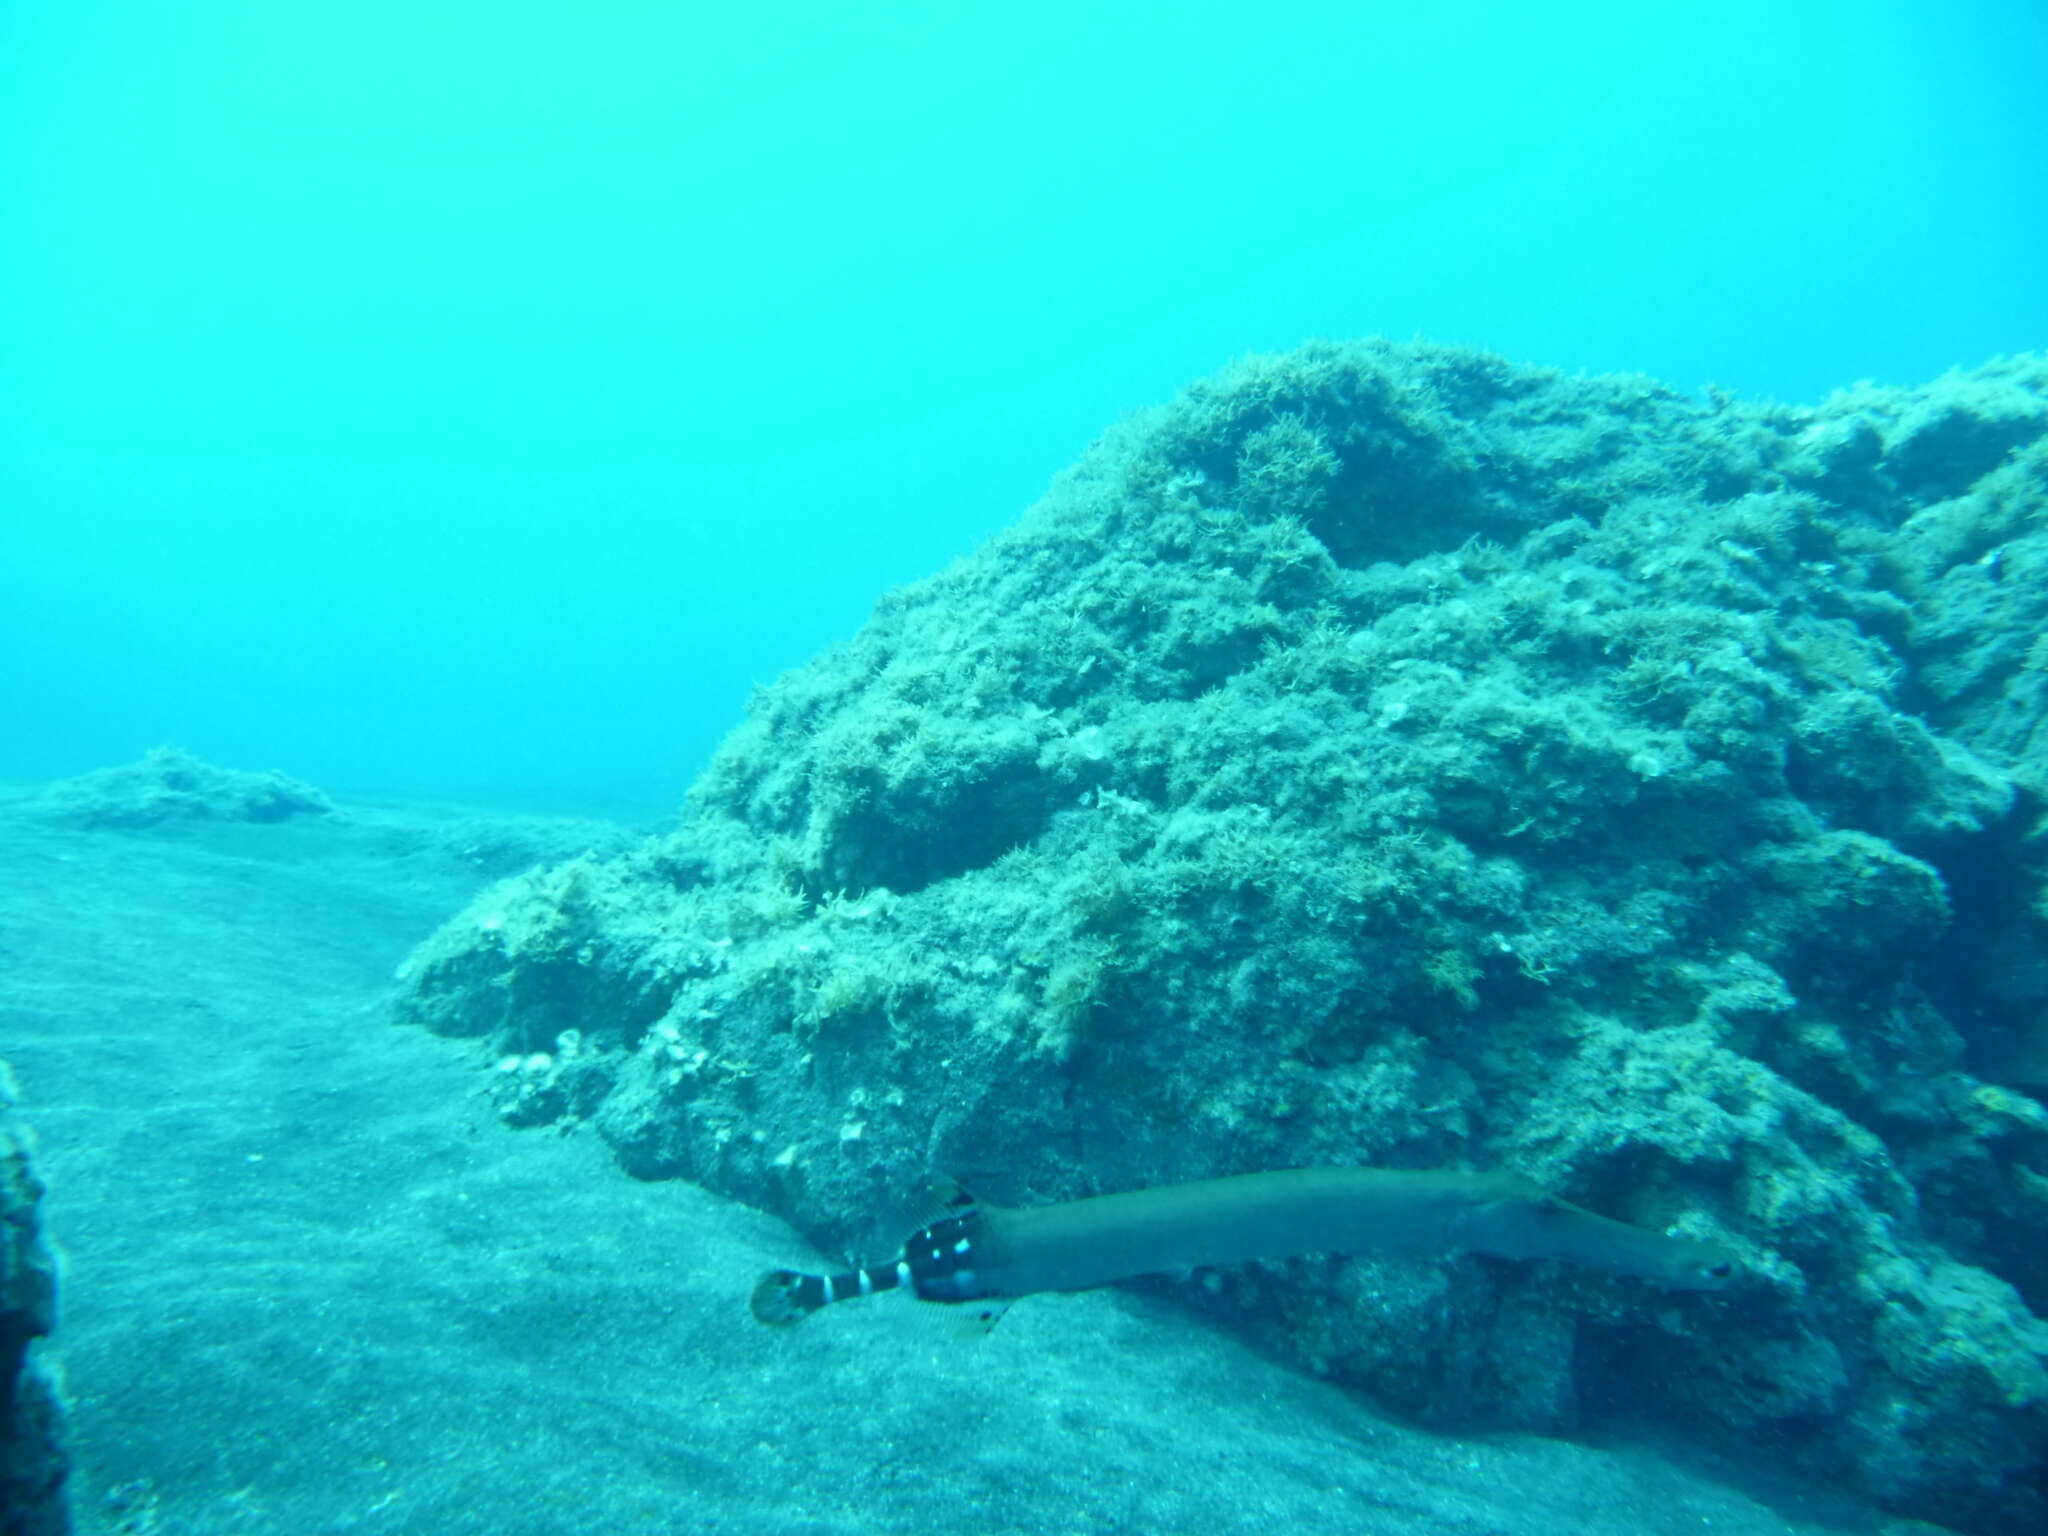 Image of Atlantic cornetfish